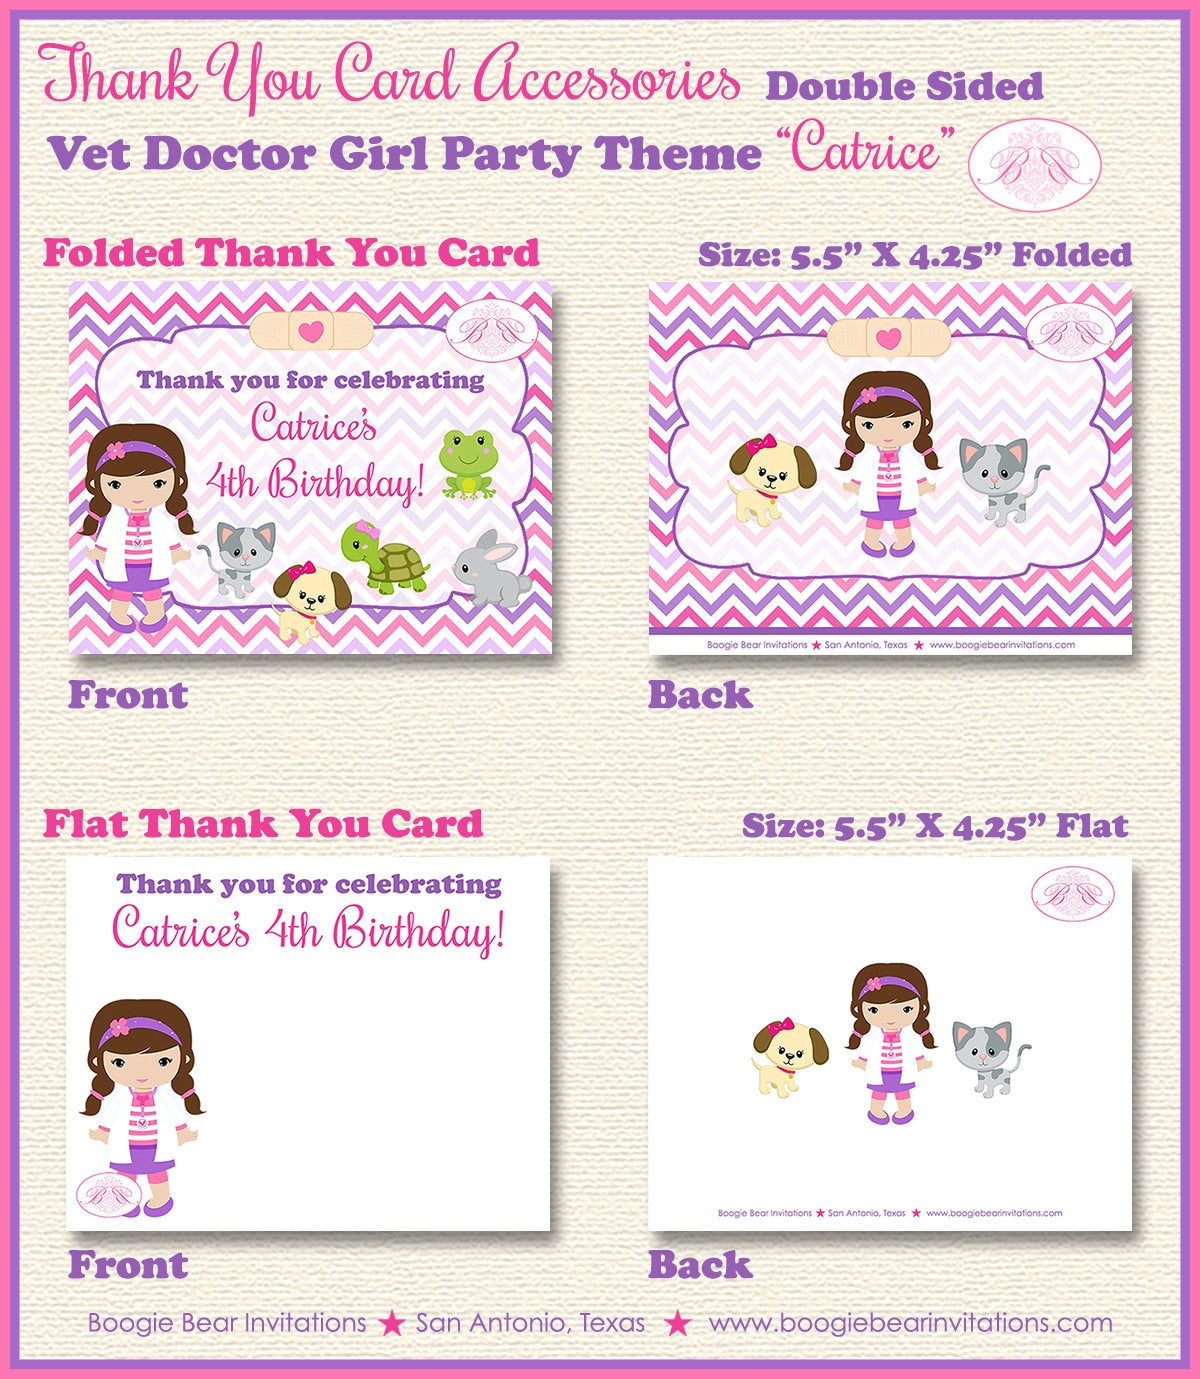 Vet Doctor Girl Birthday Party Thank You Card Hospital Animals Pink Purple Emergency Nurse ER Boogie Bear Invitations Catrice Theme Printed